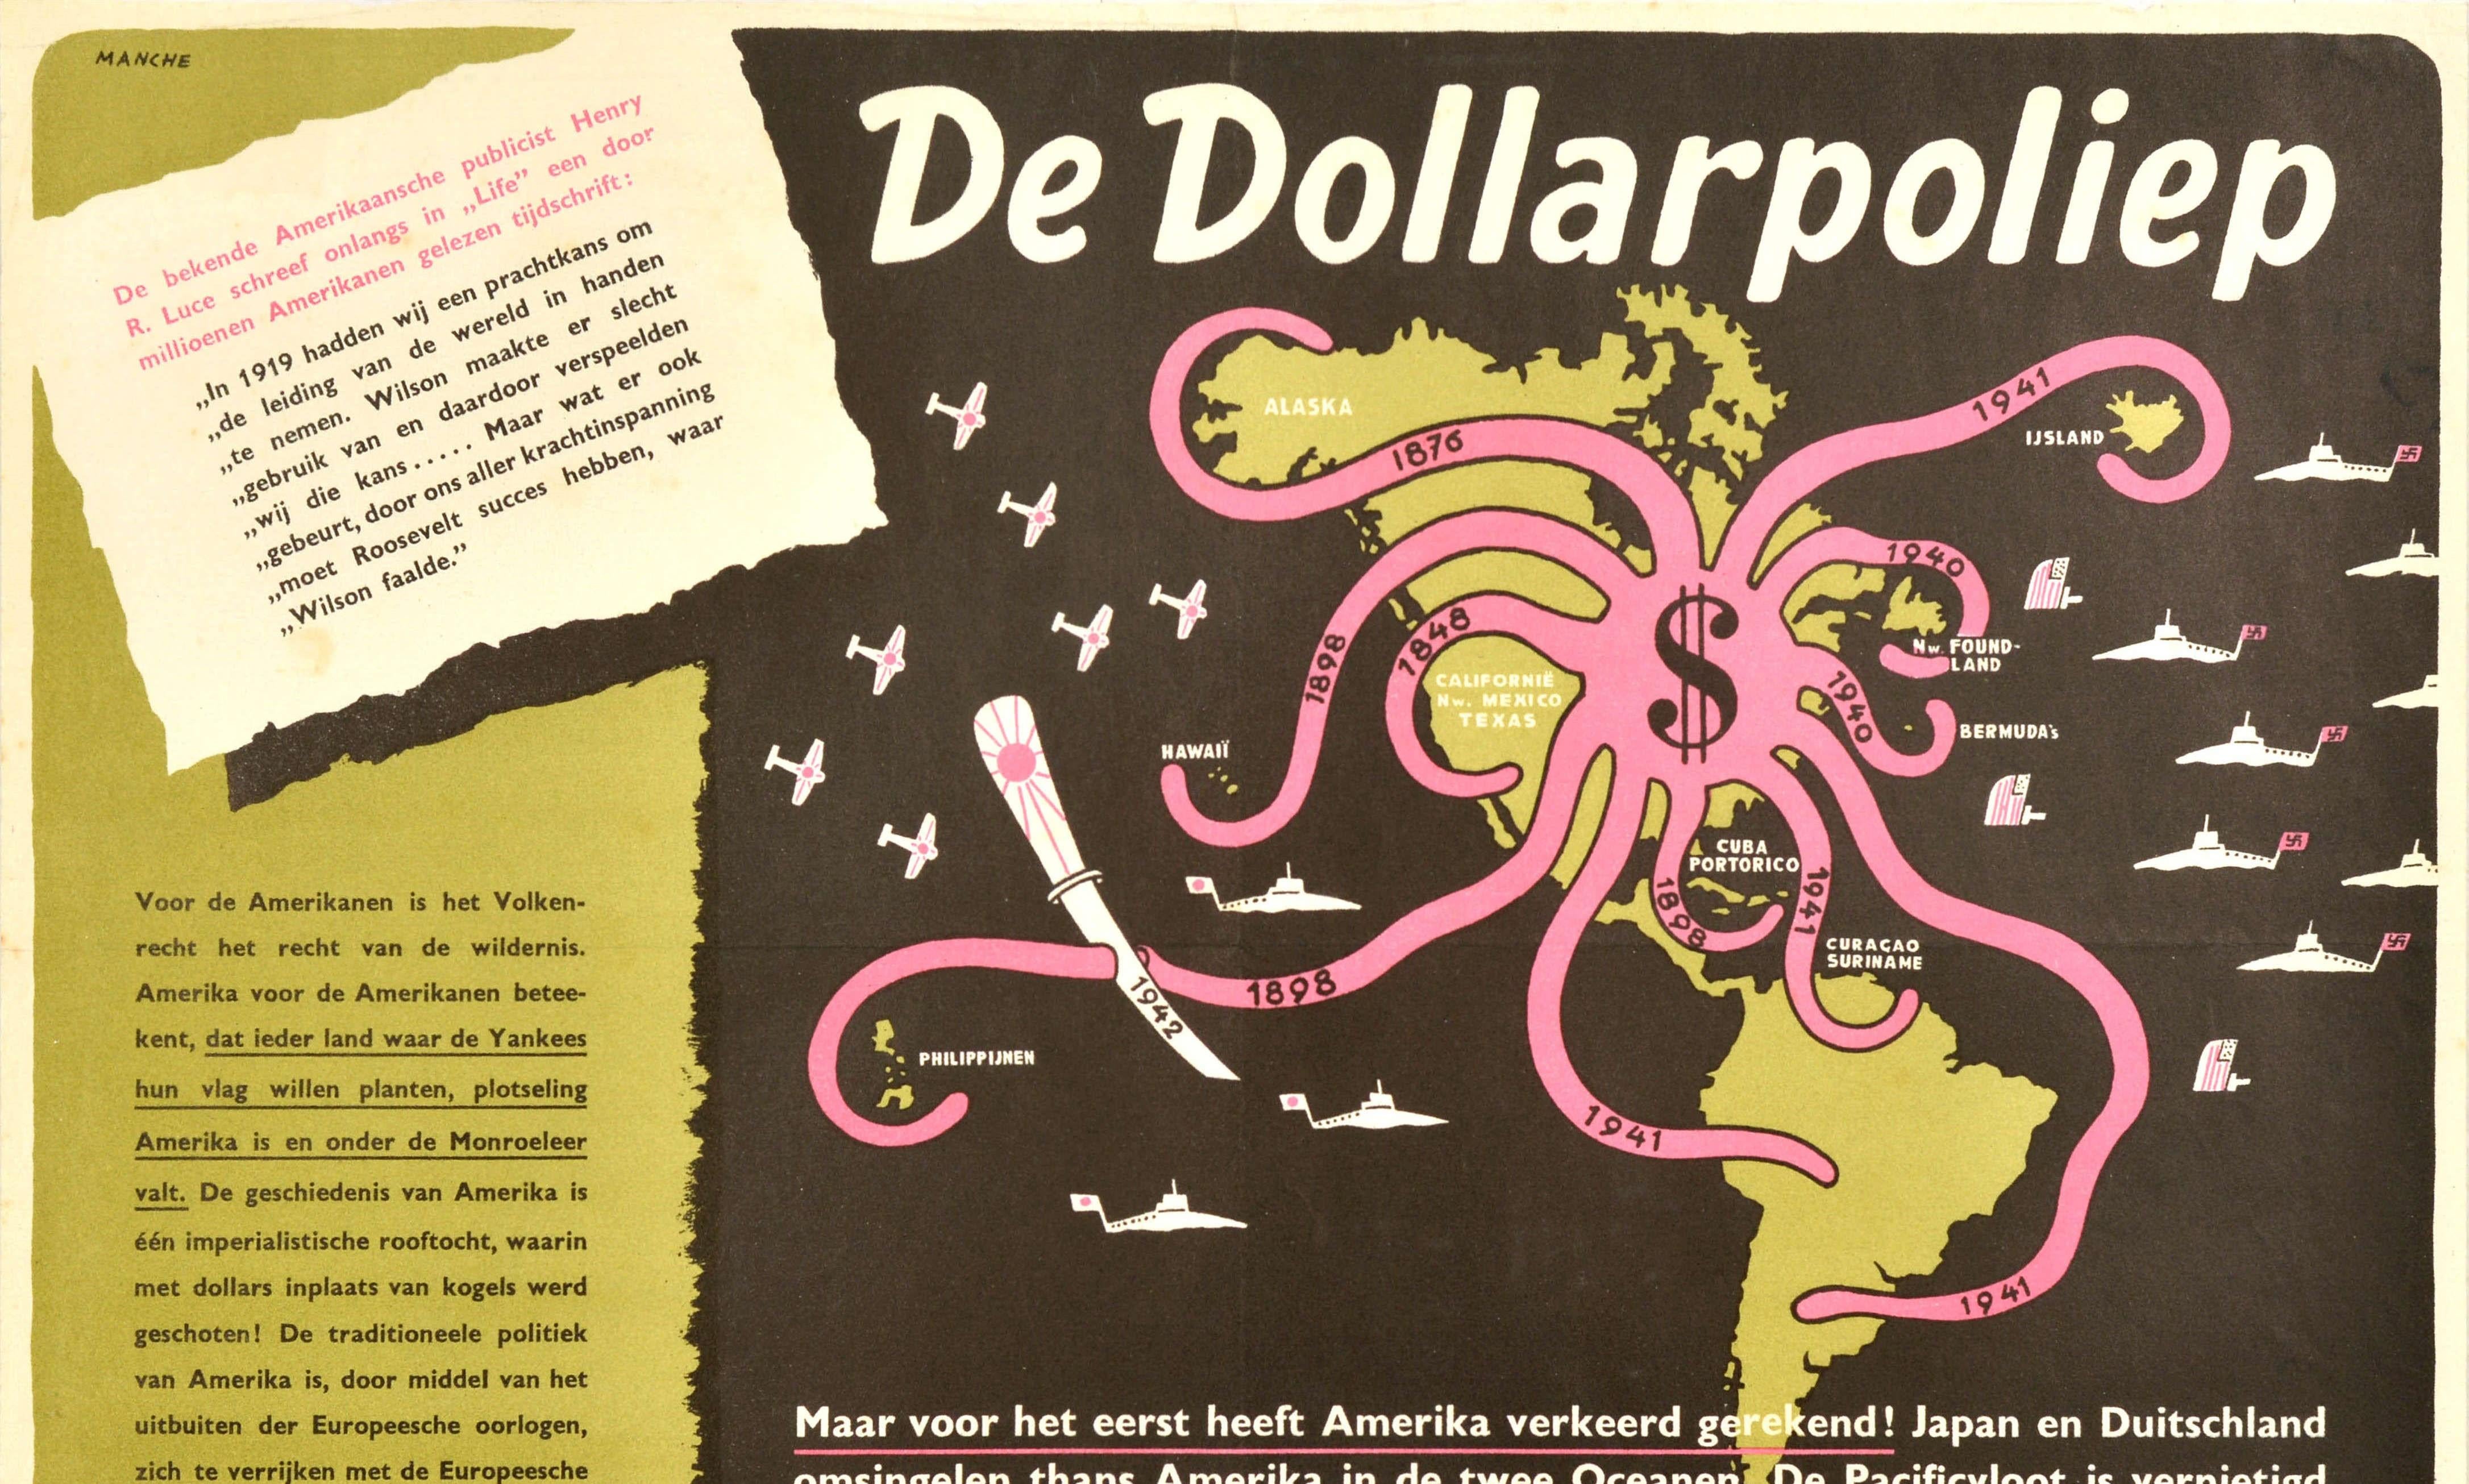 Original Vintage WWII Poster De Dollarpoliep The US Dollar Polyp Octopus War Map - Print by Louis Manche